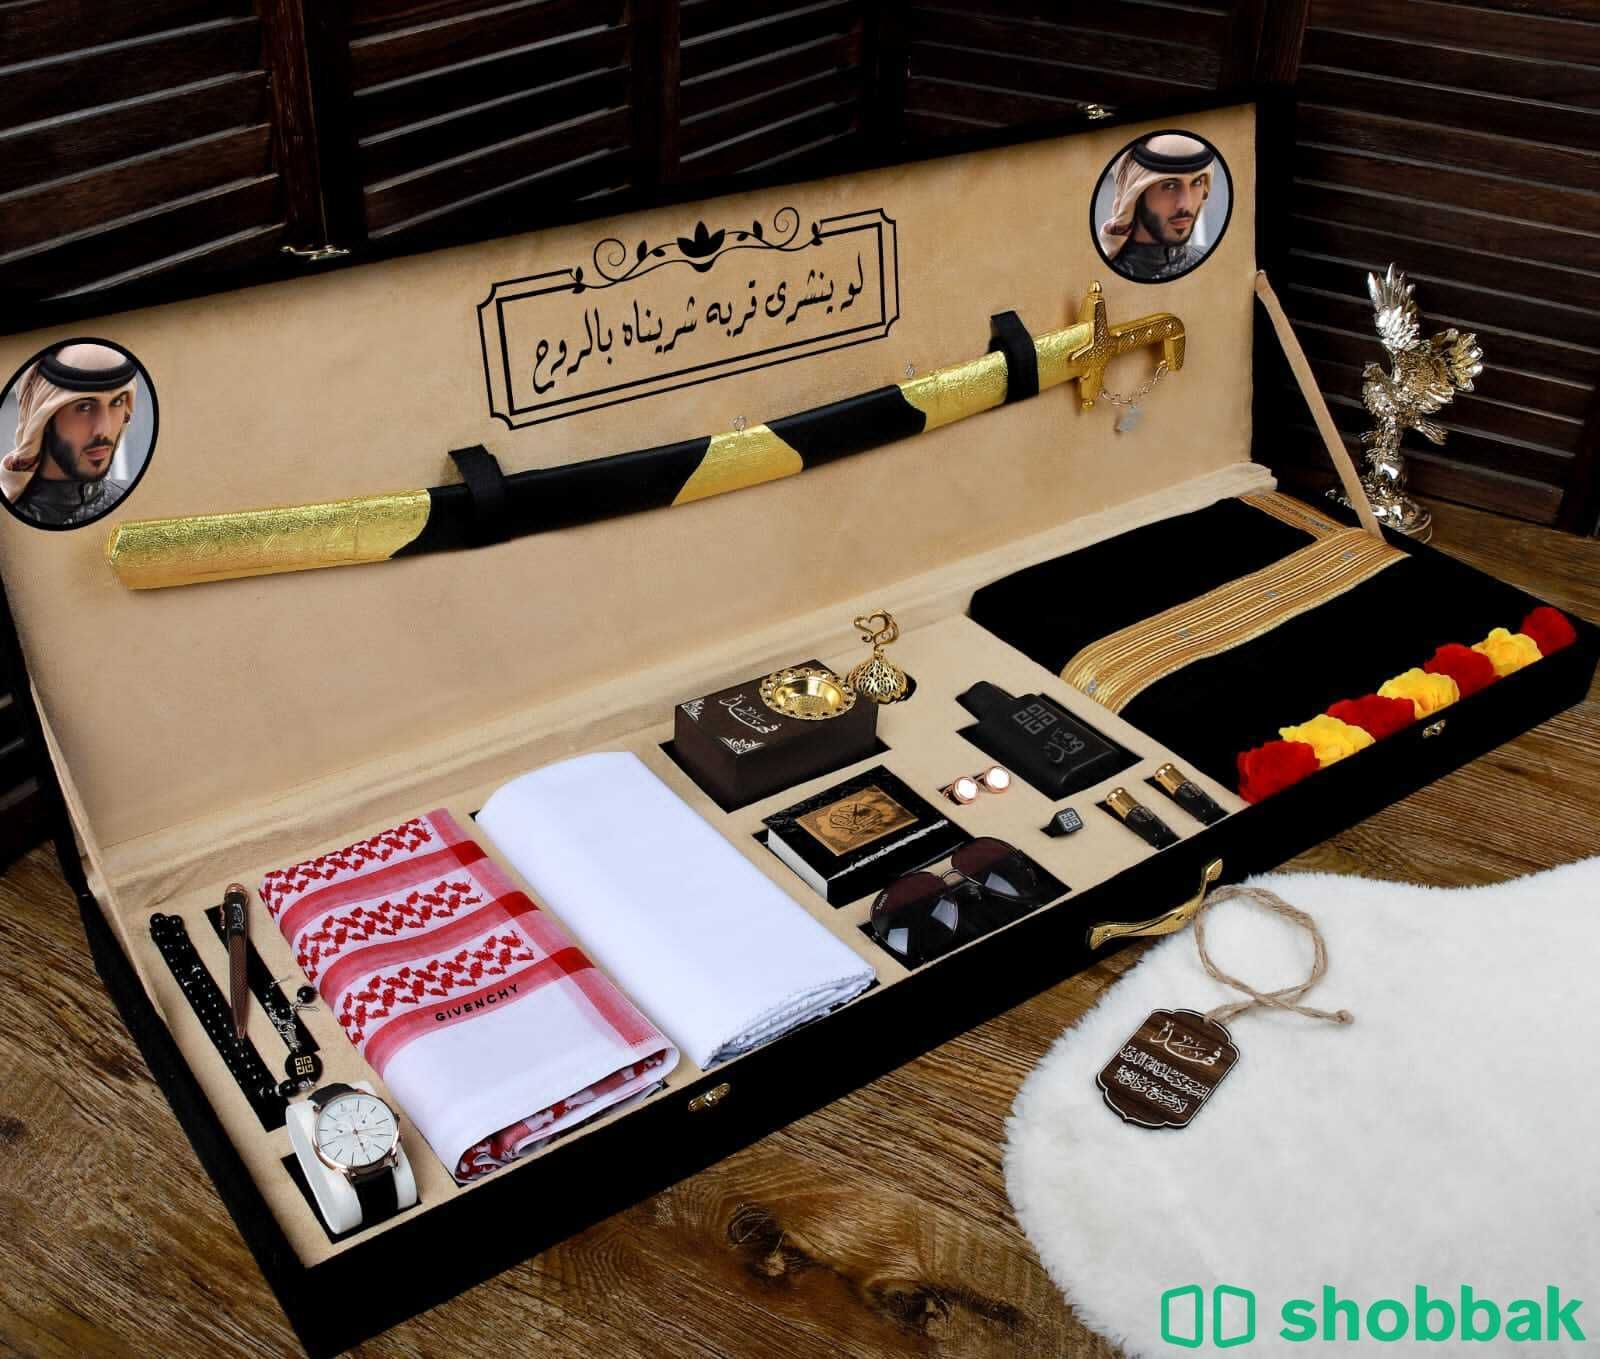 بوكس هدايا عرسان هدايا زواج وتخرج Shobbak Saudi Arabia